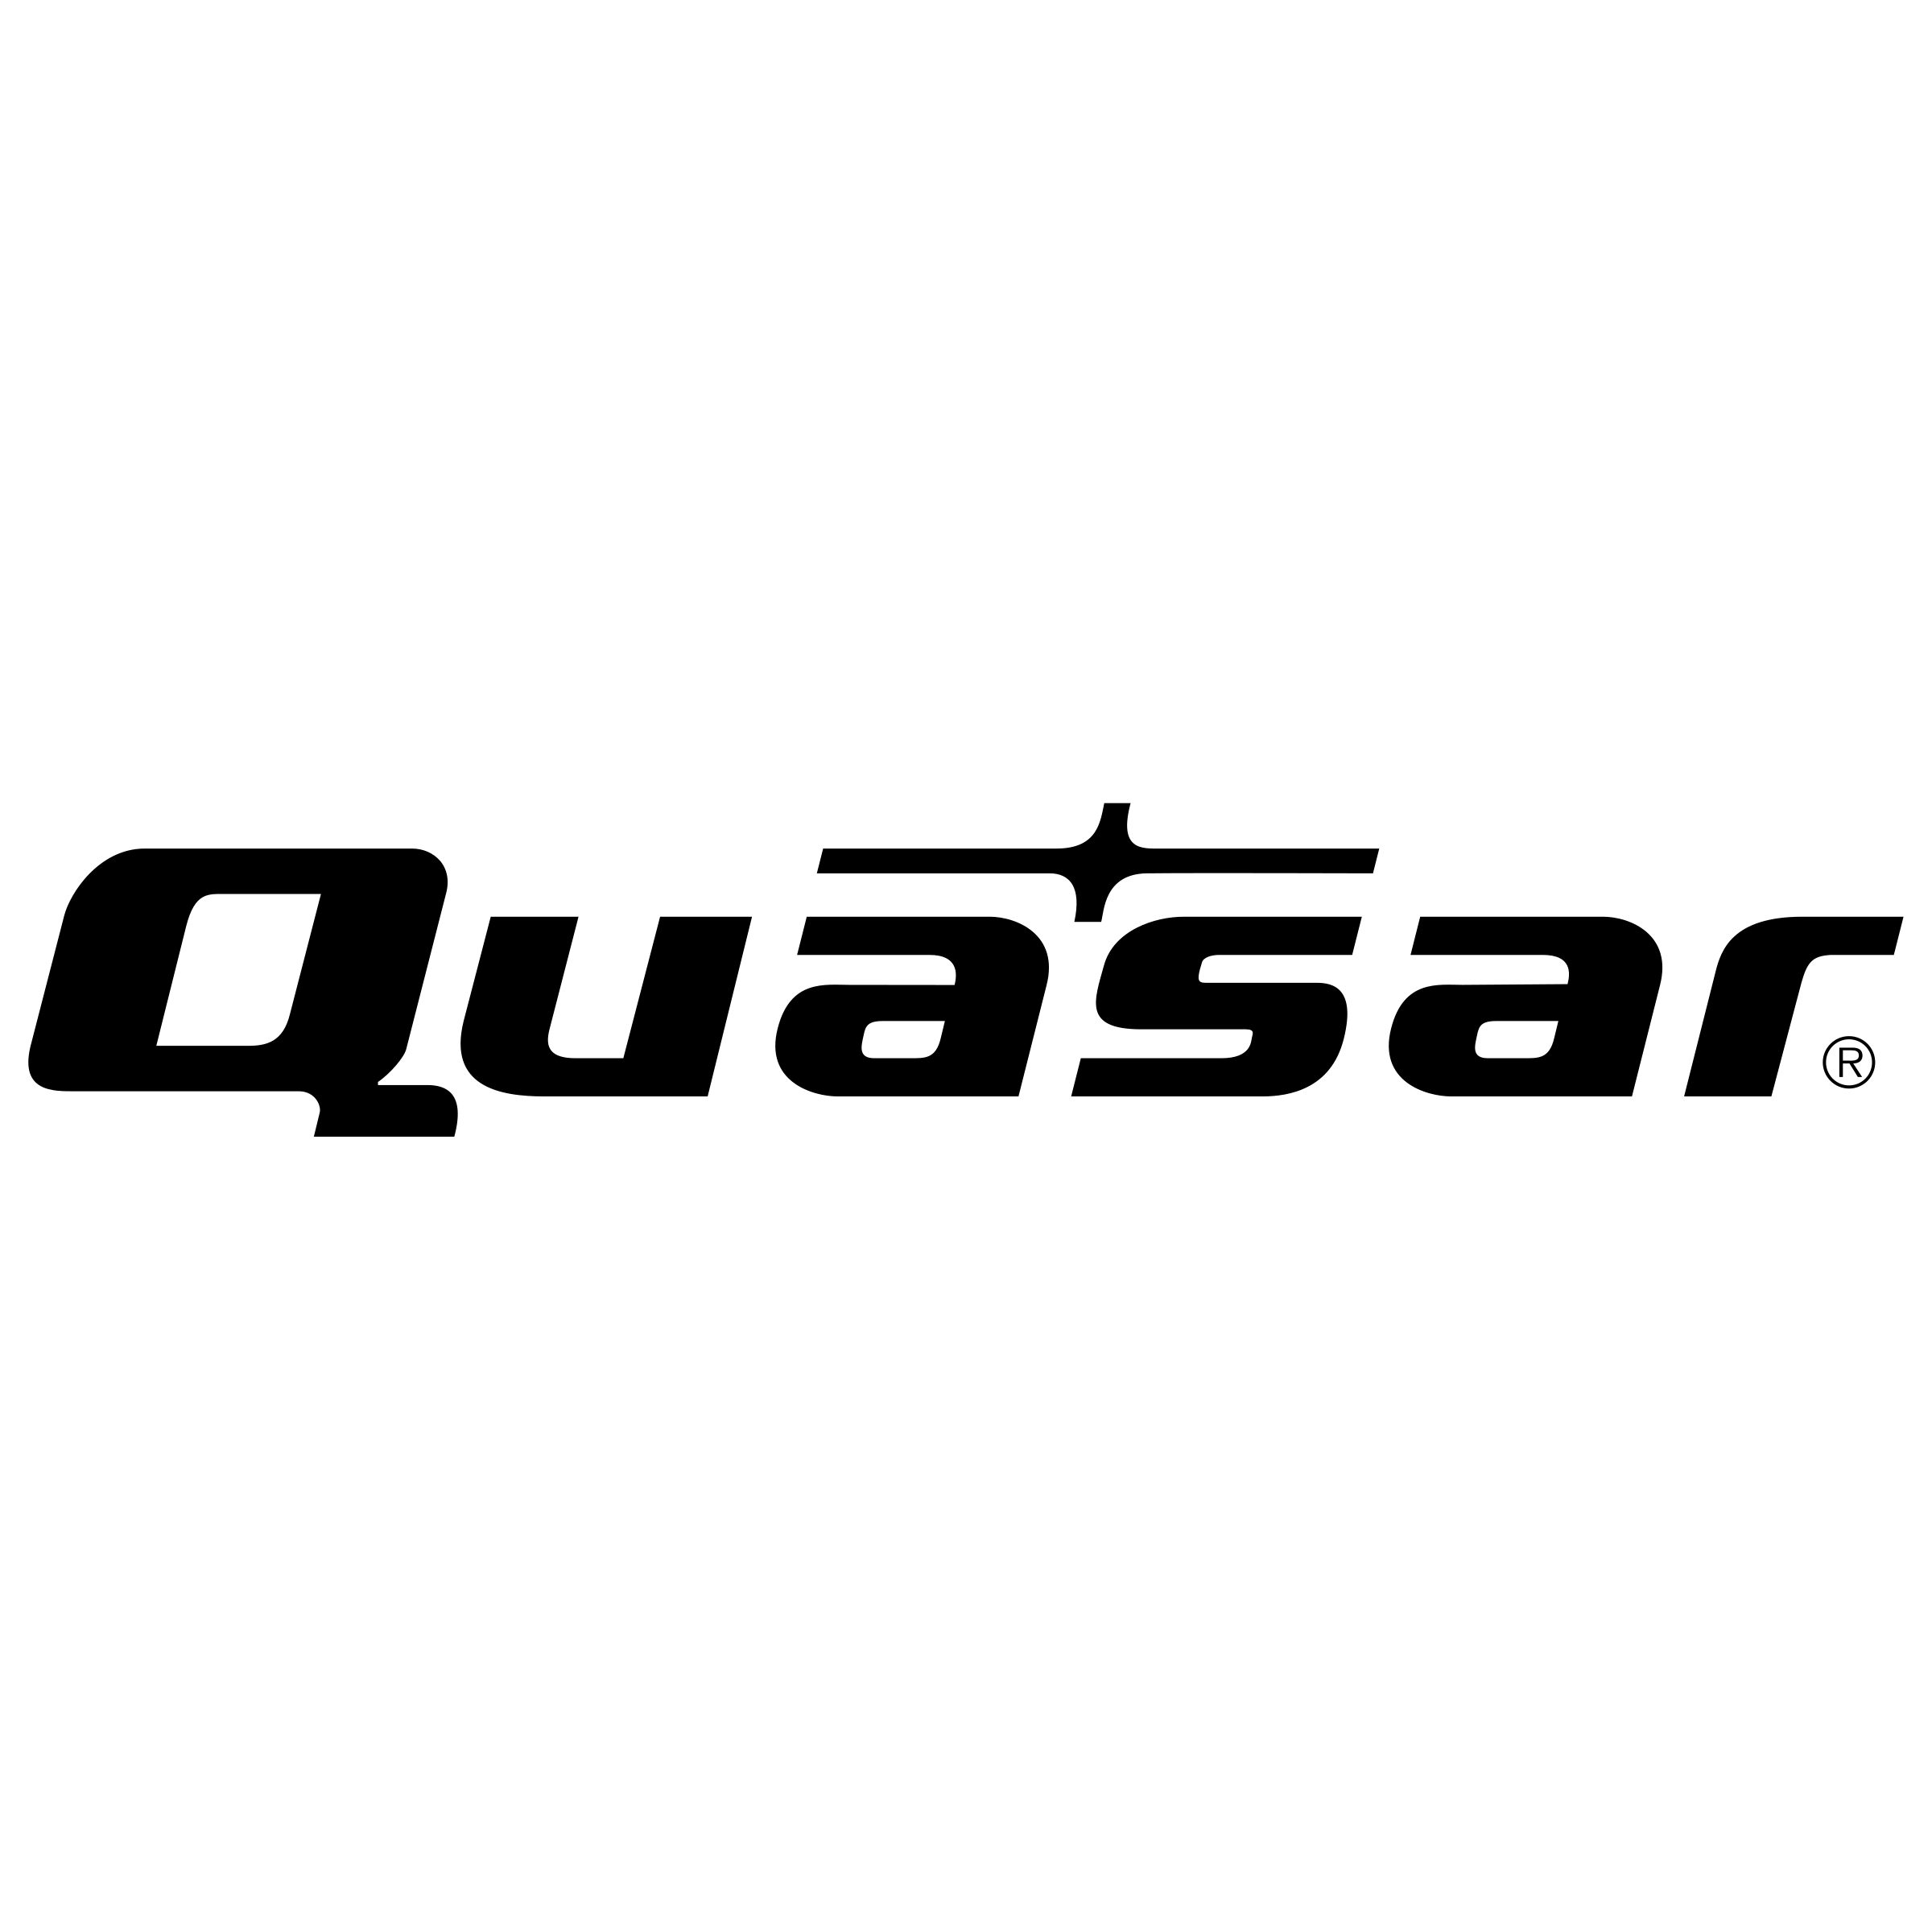 Quasar Logo - Quasar Logo PNG Transparent & SVG Vector